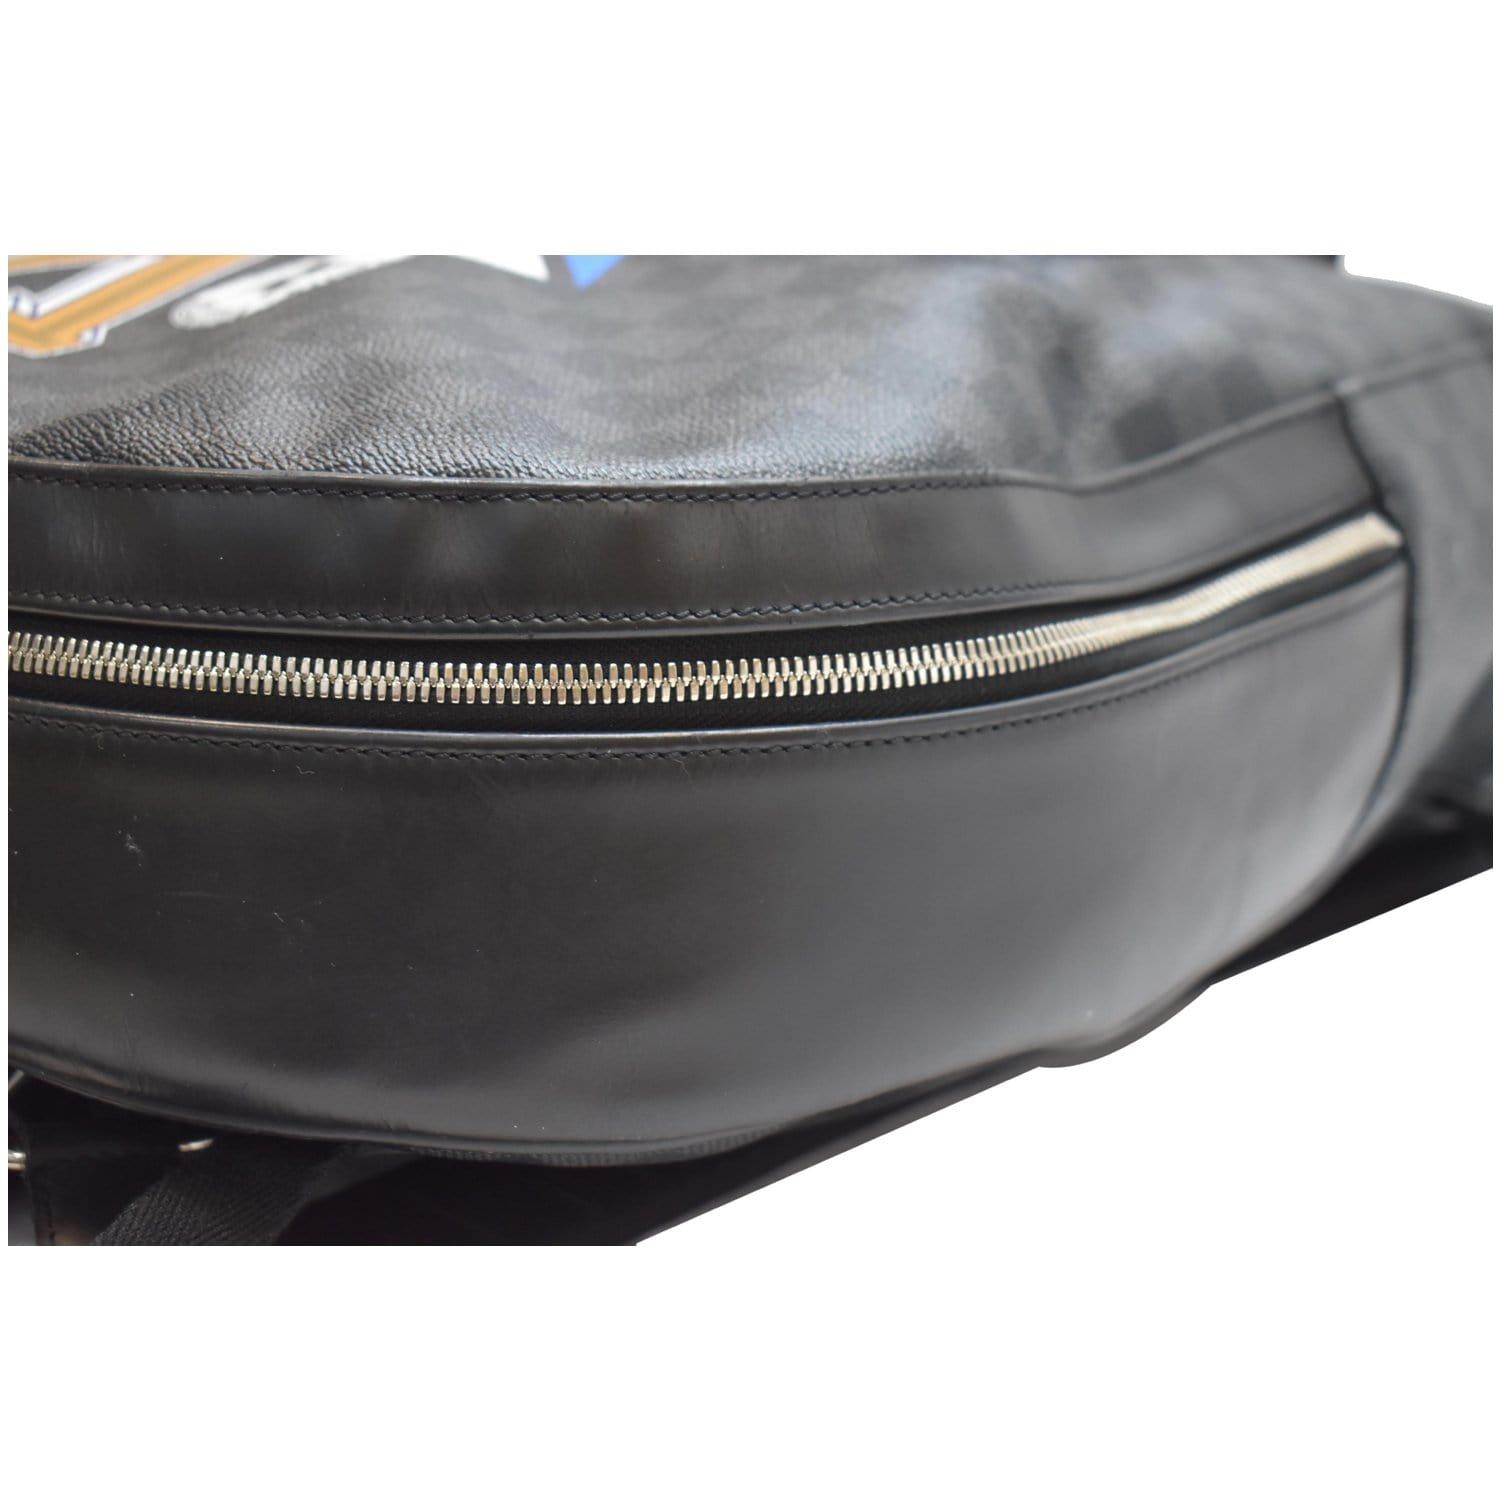 Louis Vuitton Josh Rucksack Backpack N40084 Damier Graphite Pixel Black  Color 